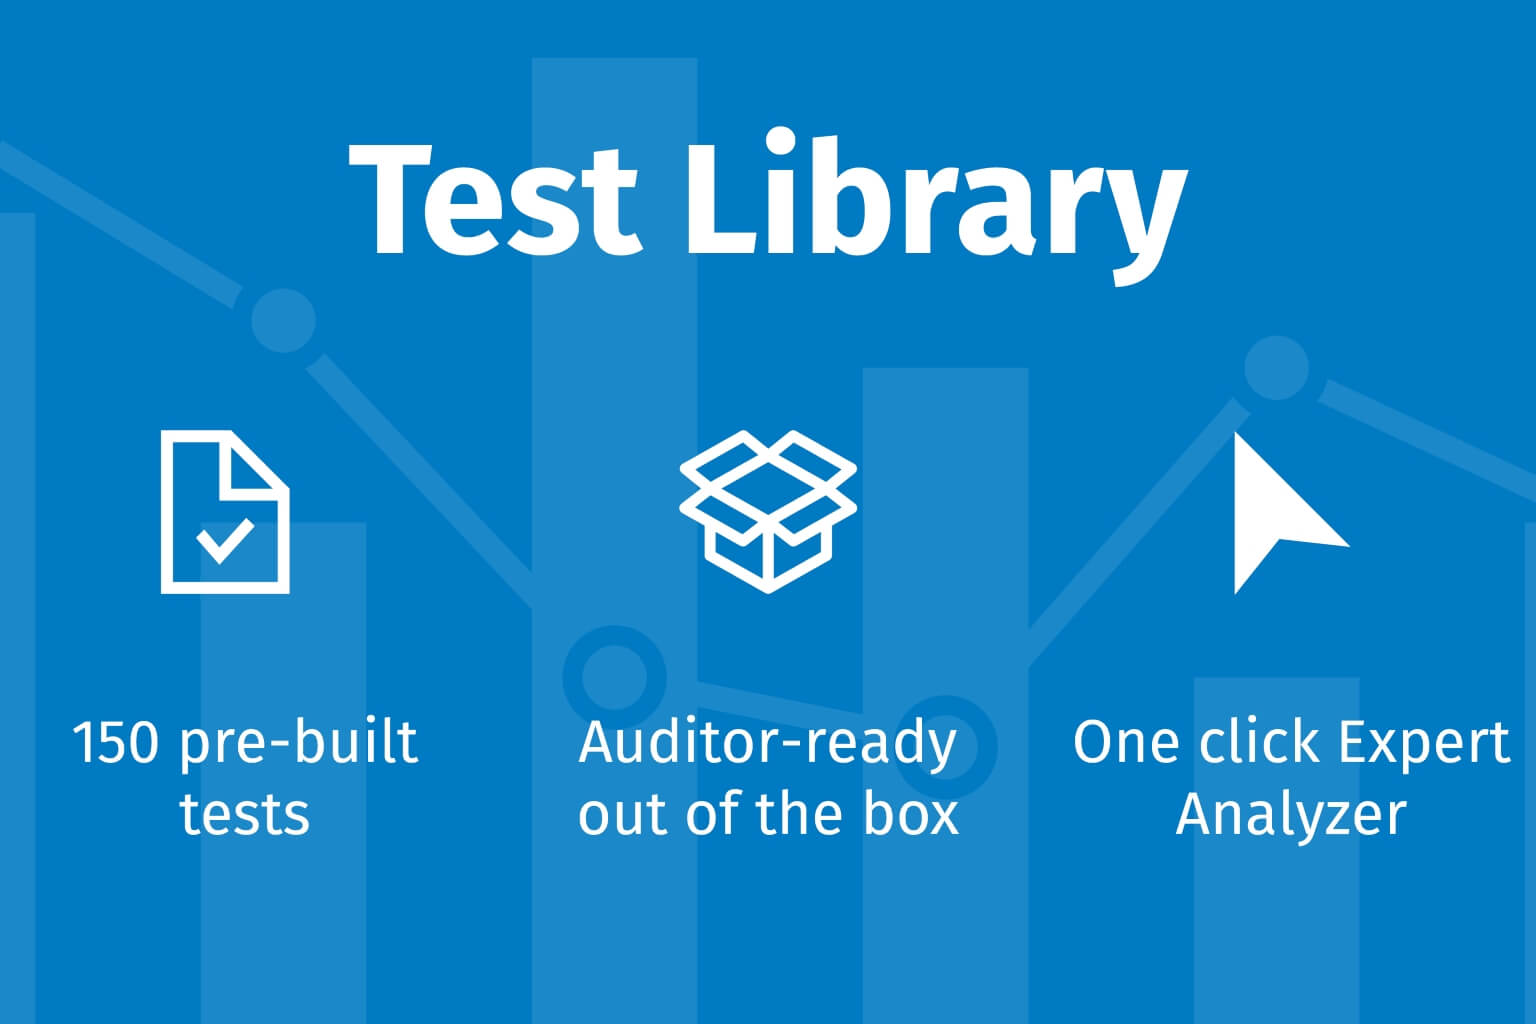 TeamMate Analytics core capabilities Test Library video walkthrough still